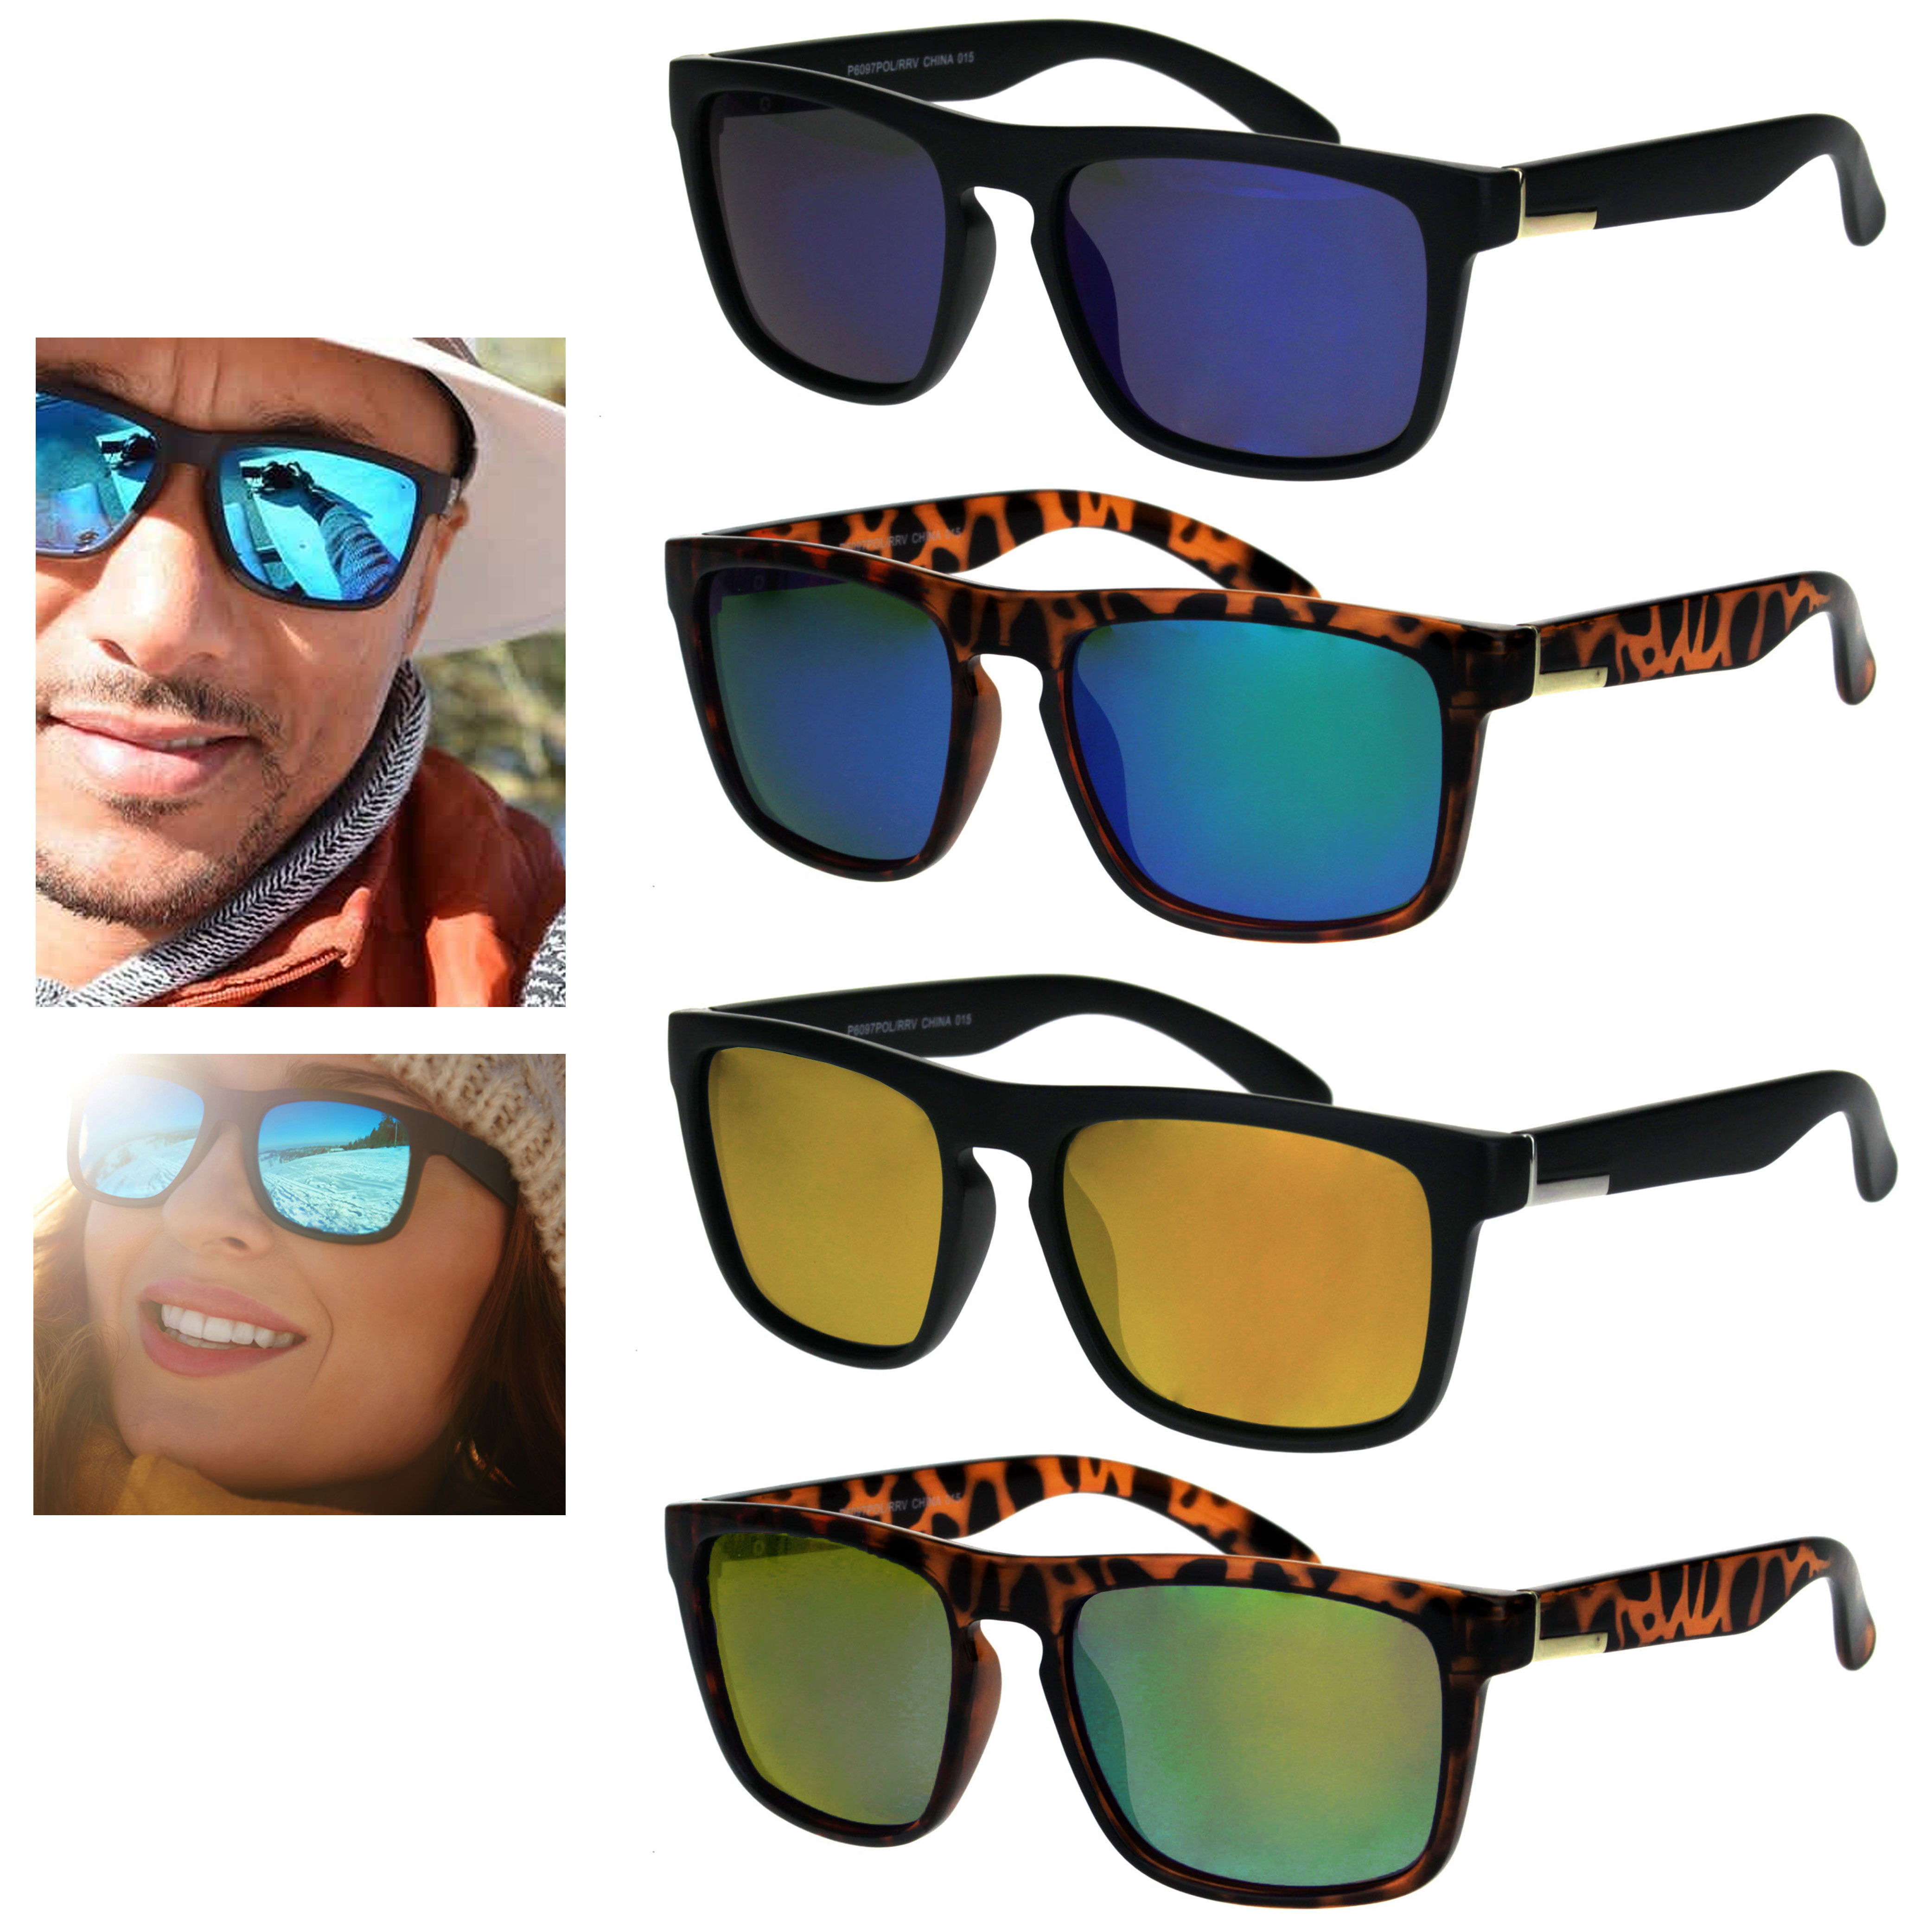 Liive Hoy 4 Sunglasses - Polarised Mirror - Floating Frame - Sun & Beach  Accessories | Hydro Surf Shop | Dunedin, NZ - LIIVE W20